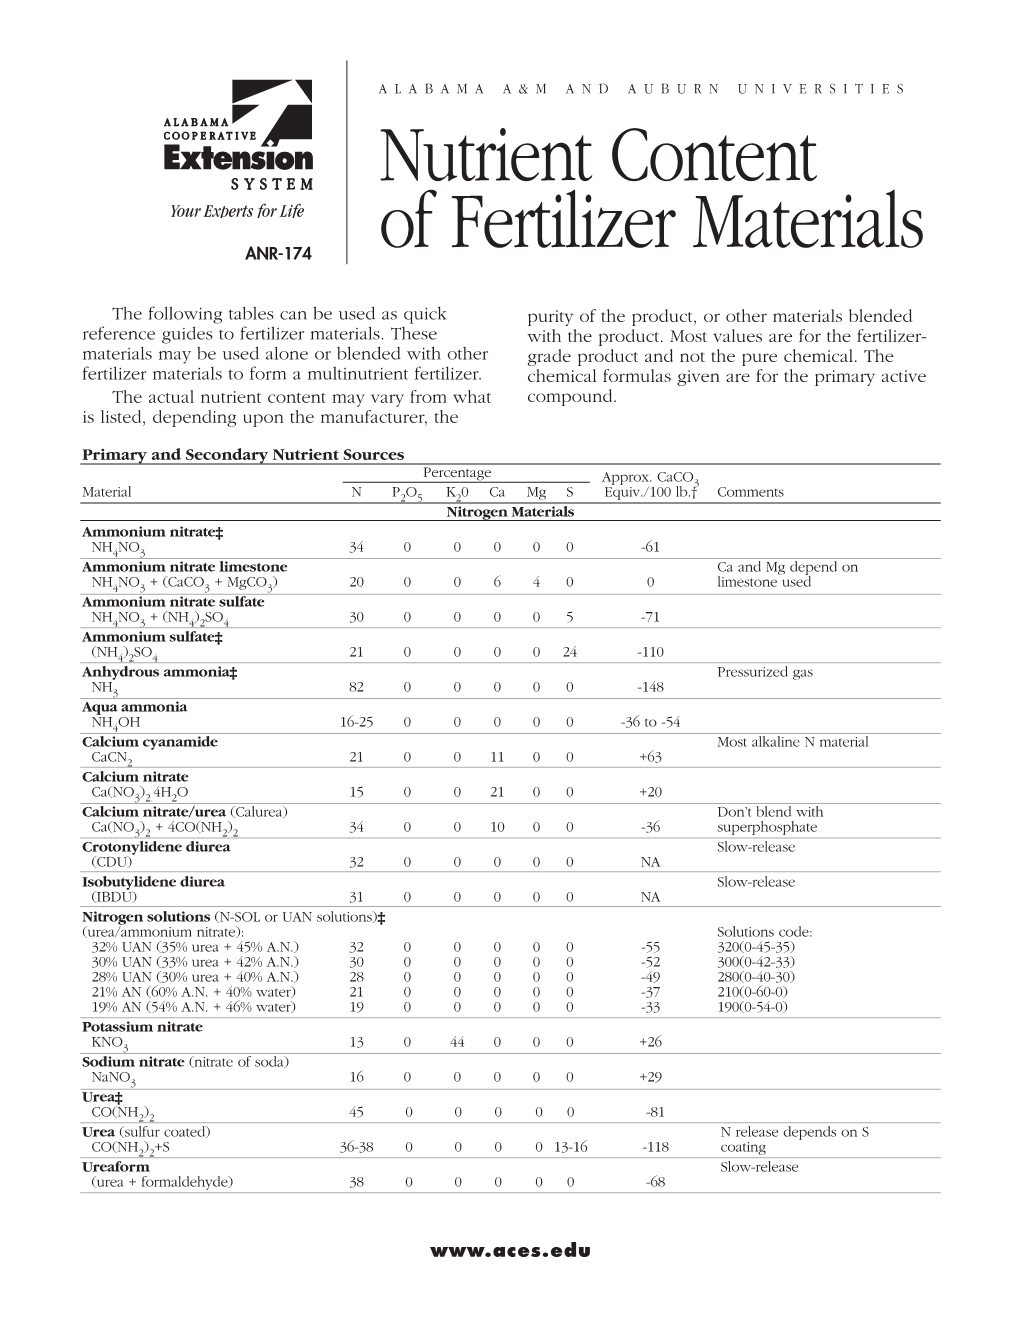 Nutrient Content of Fertilizer Materials